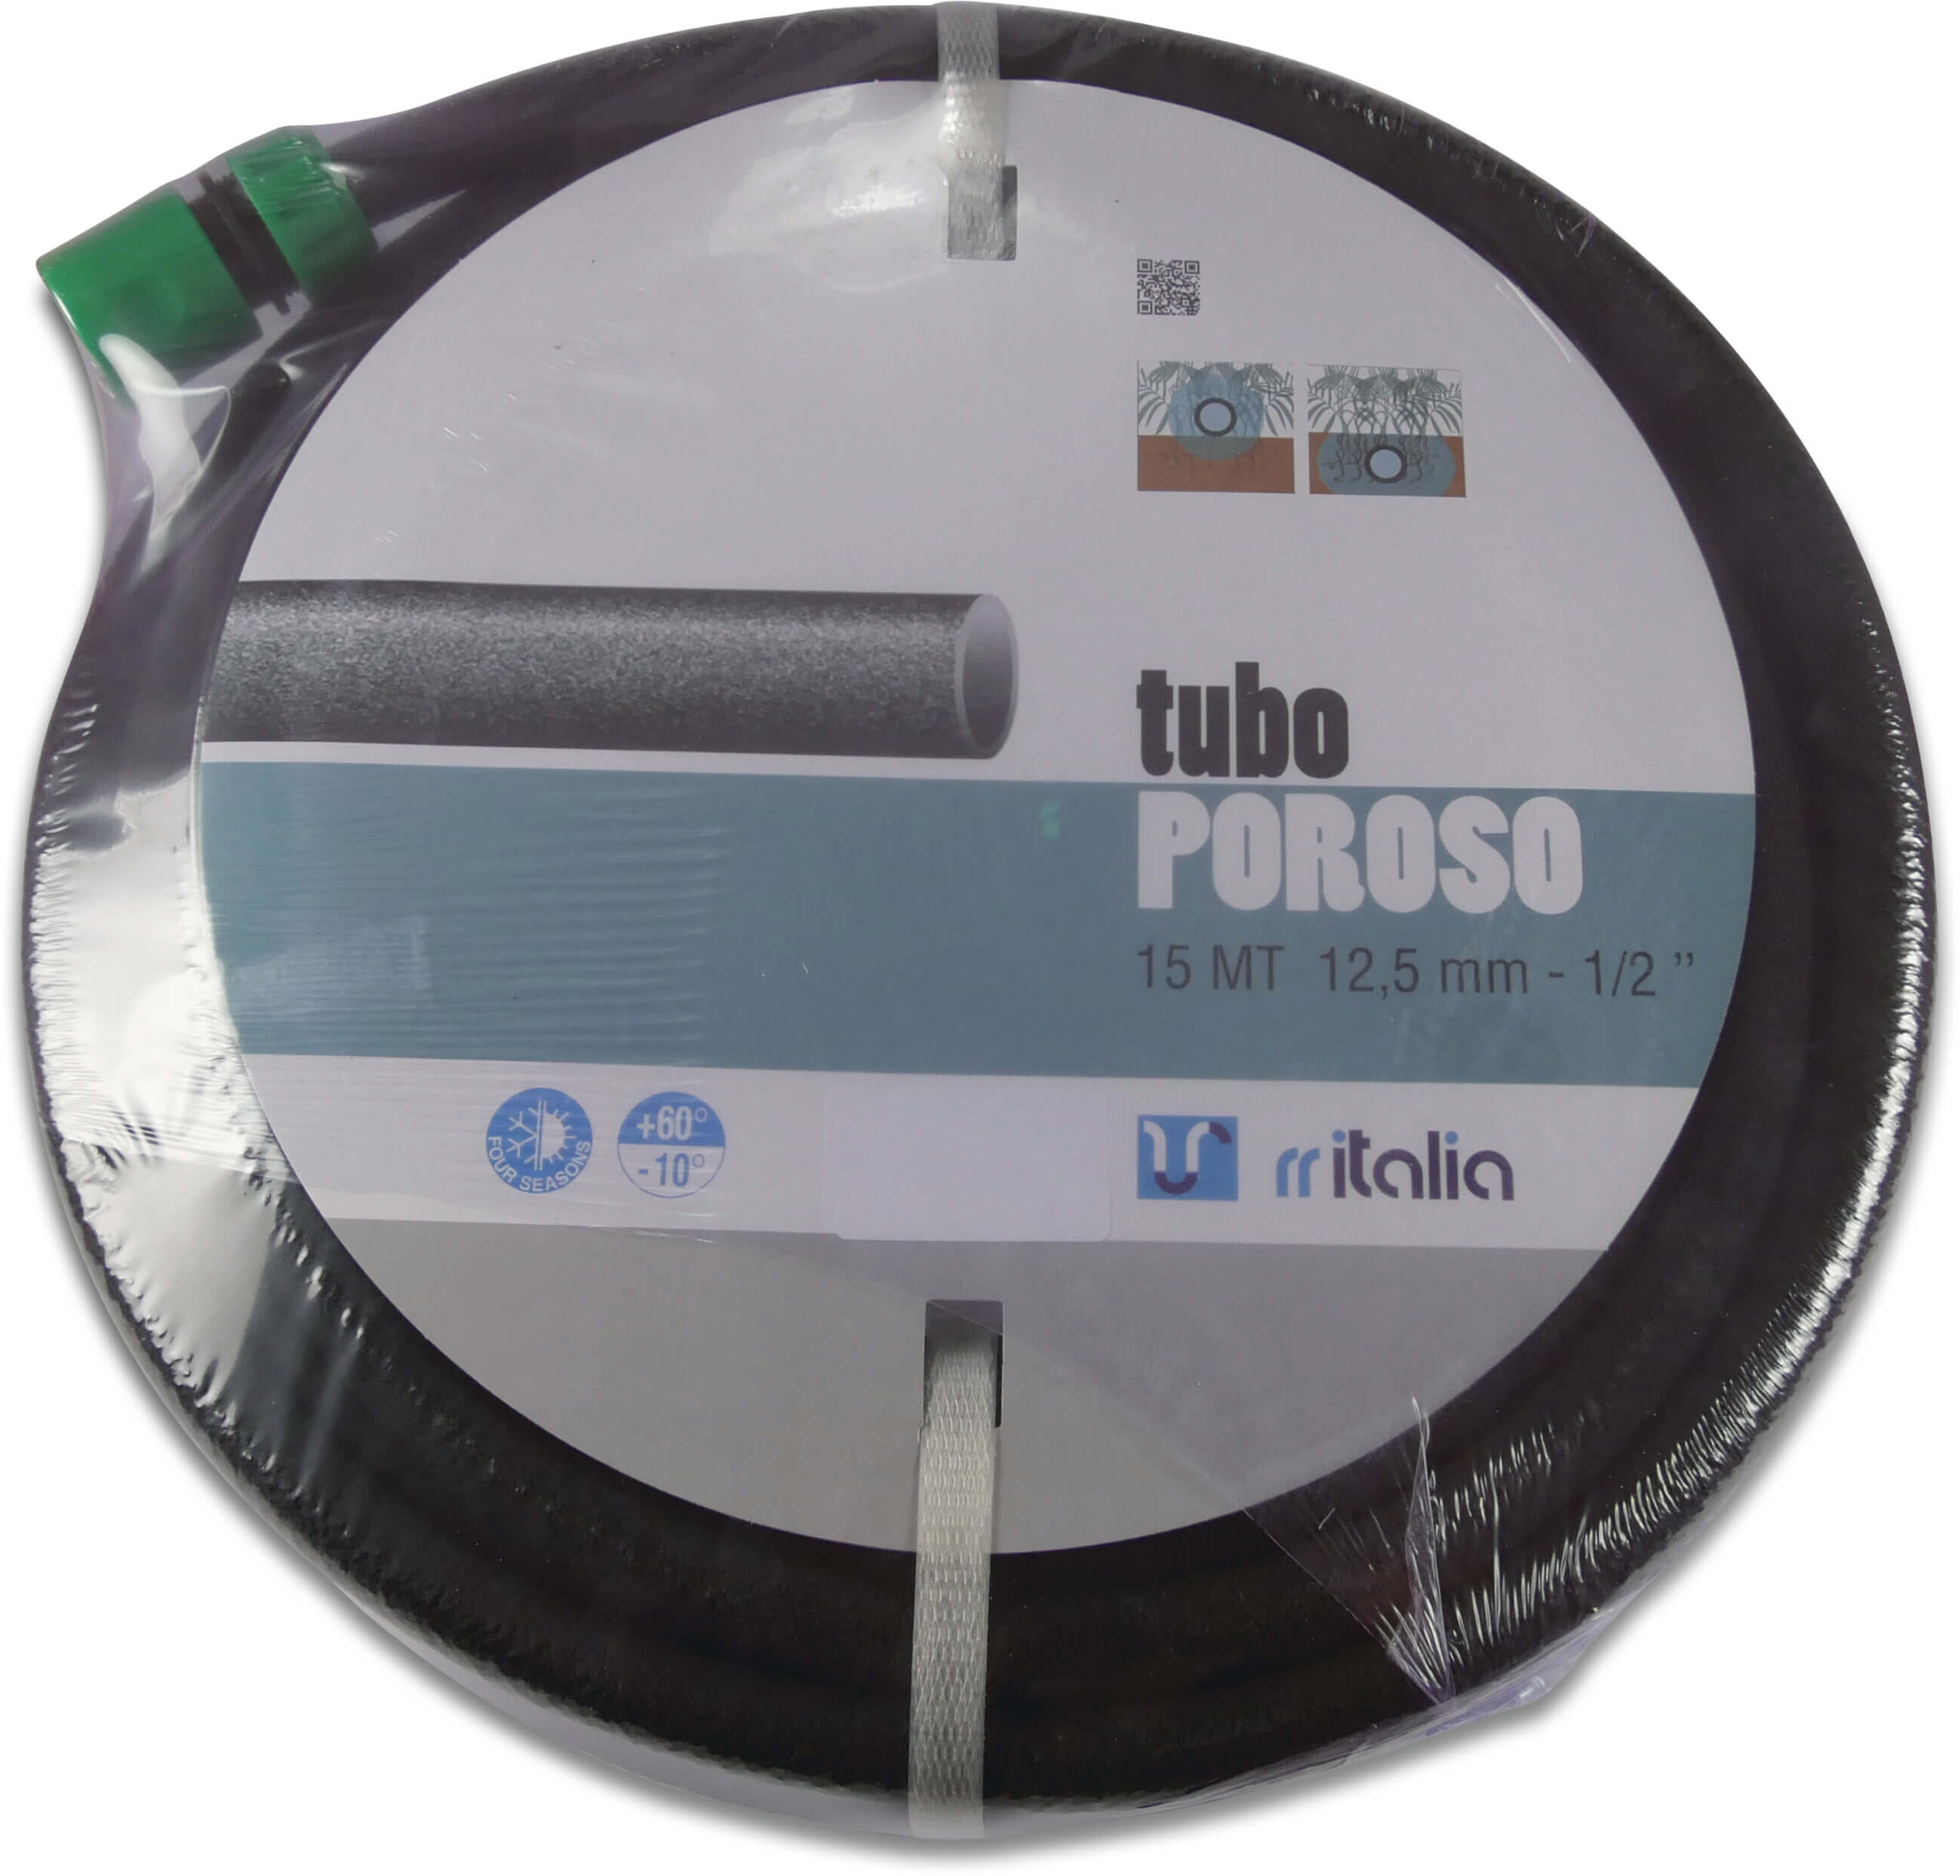 Soaker hose rubber 12,5 mm female click black 15m